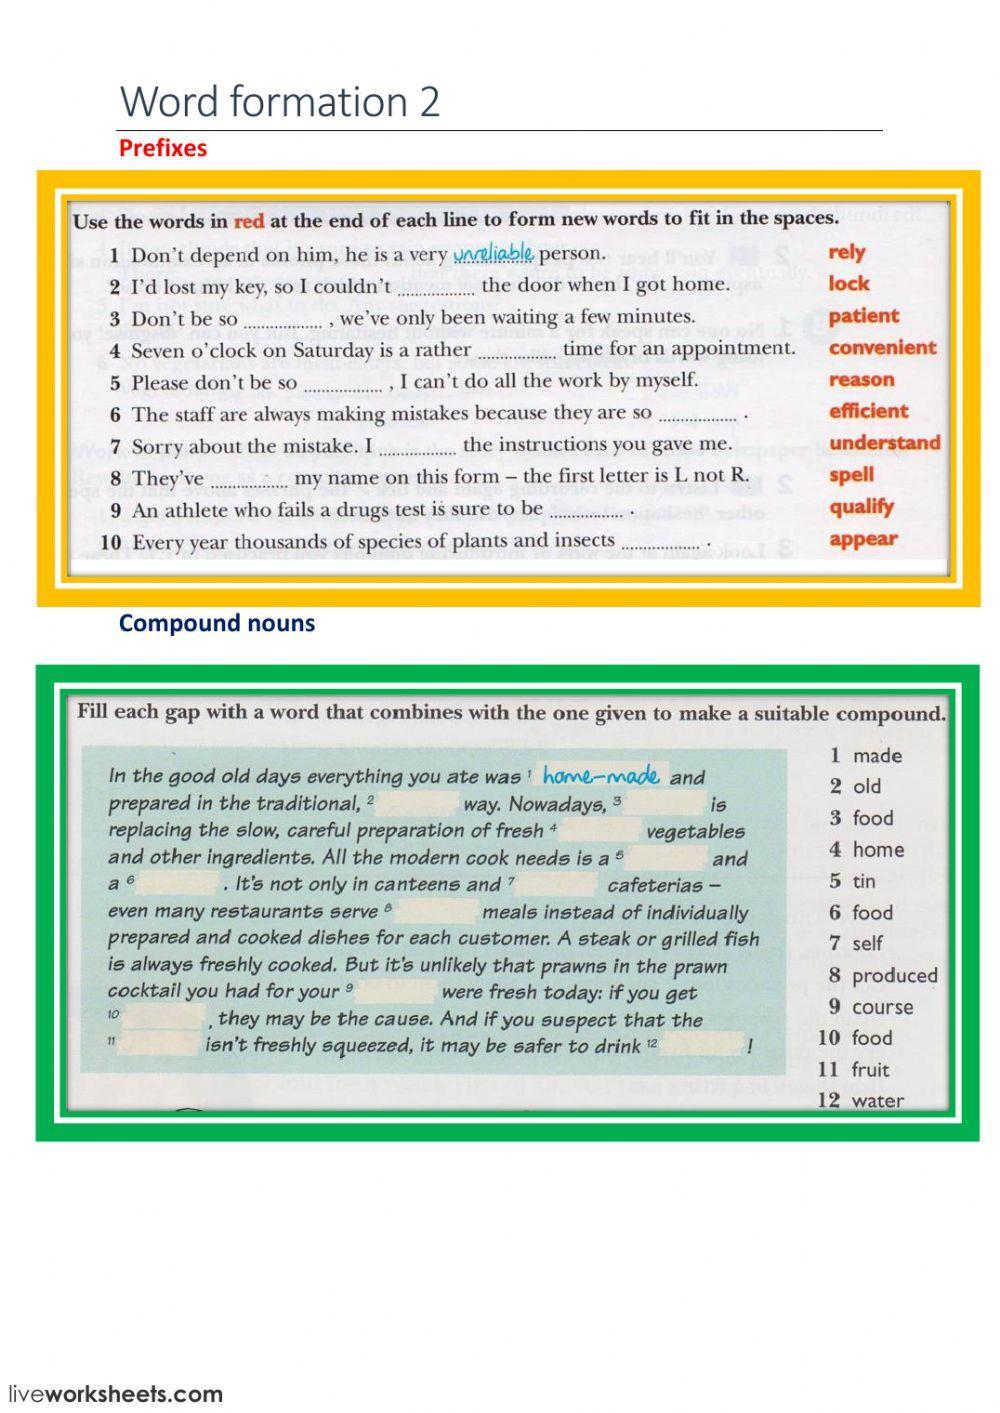 Word formation - prefixes - compound nouns